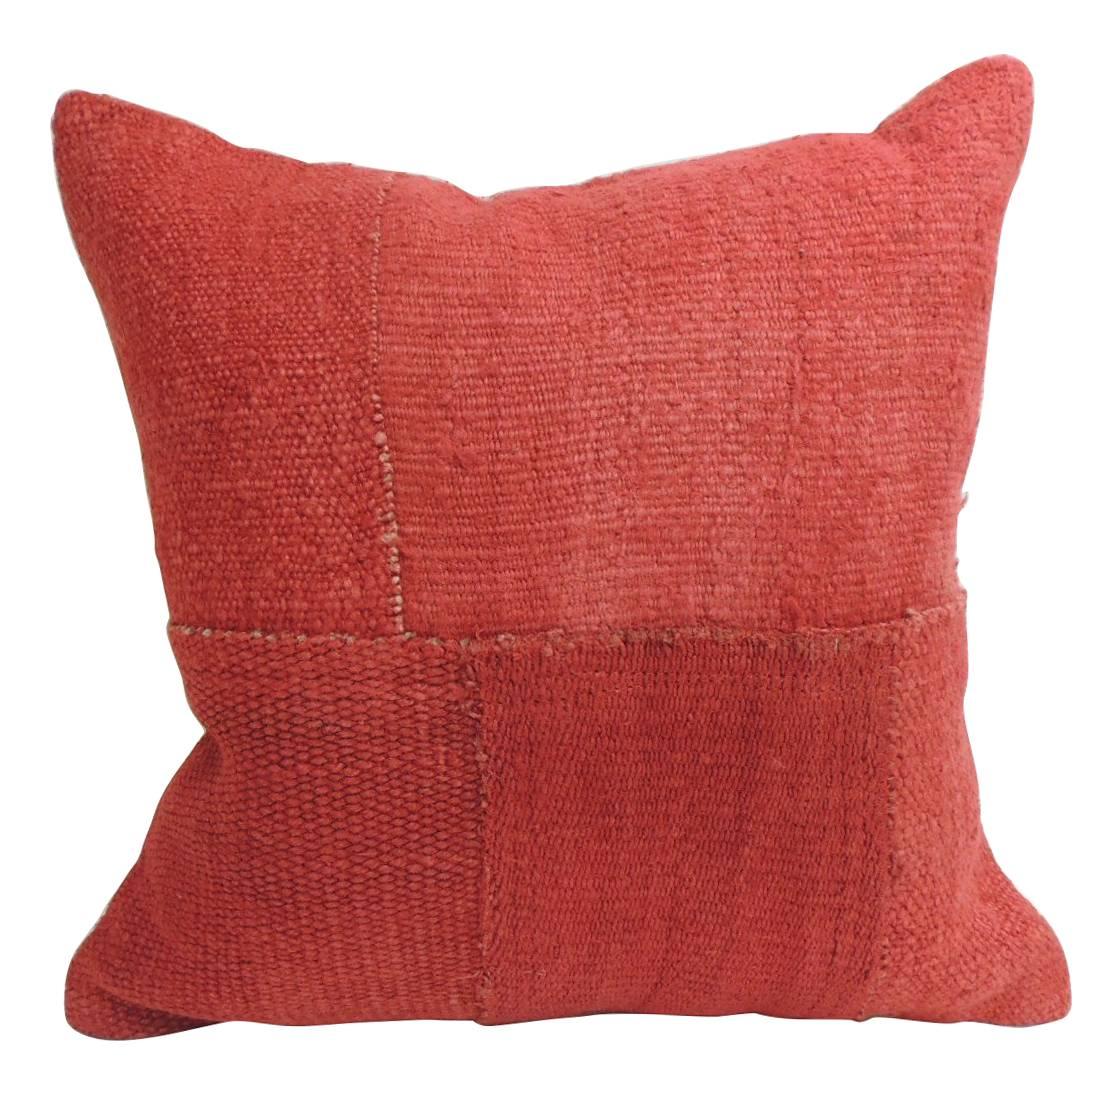 Vintage Bright Color Kilim Decorative Pillow with Modern Patchwork Design